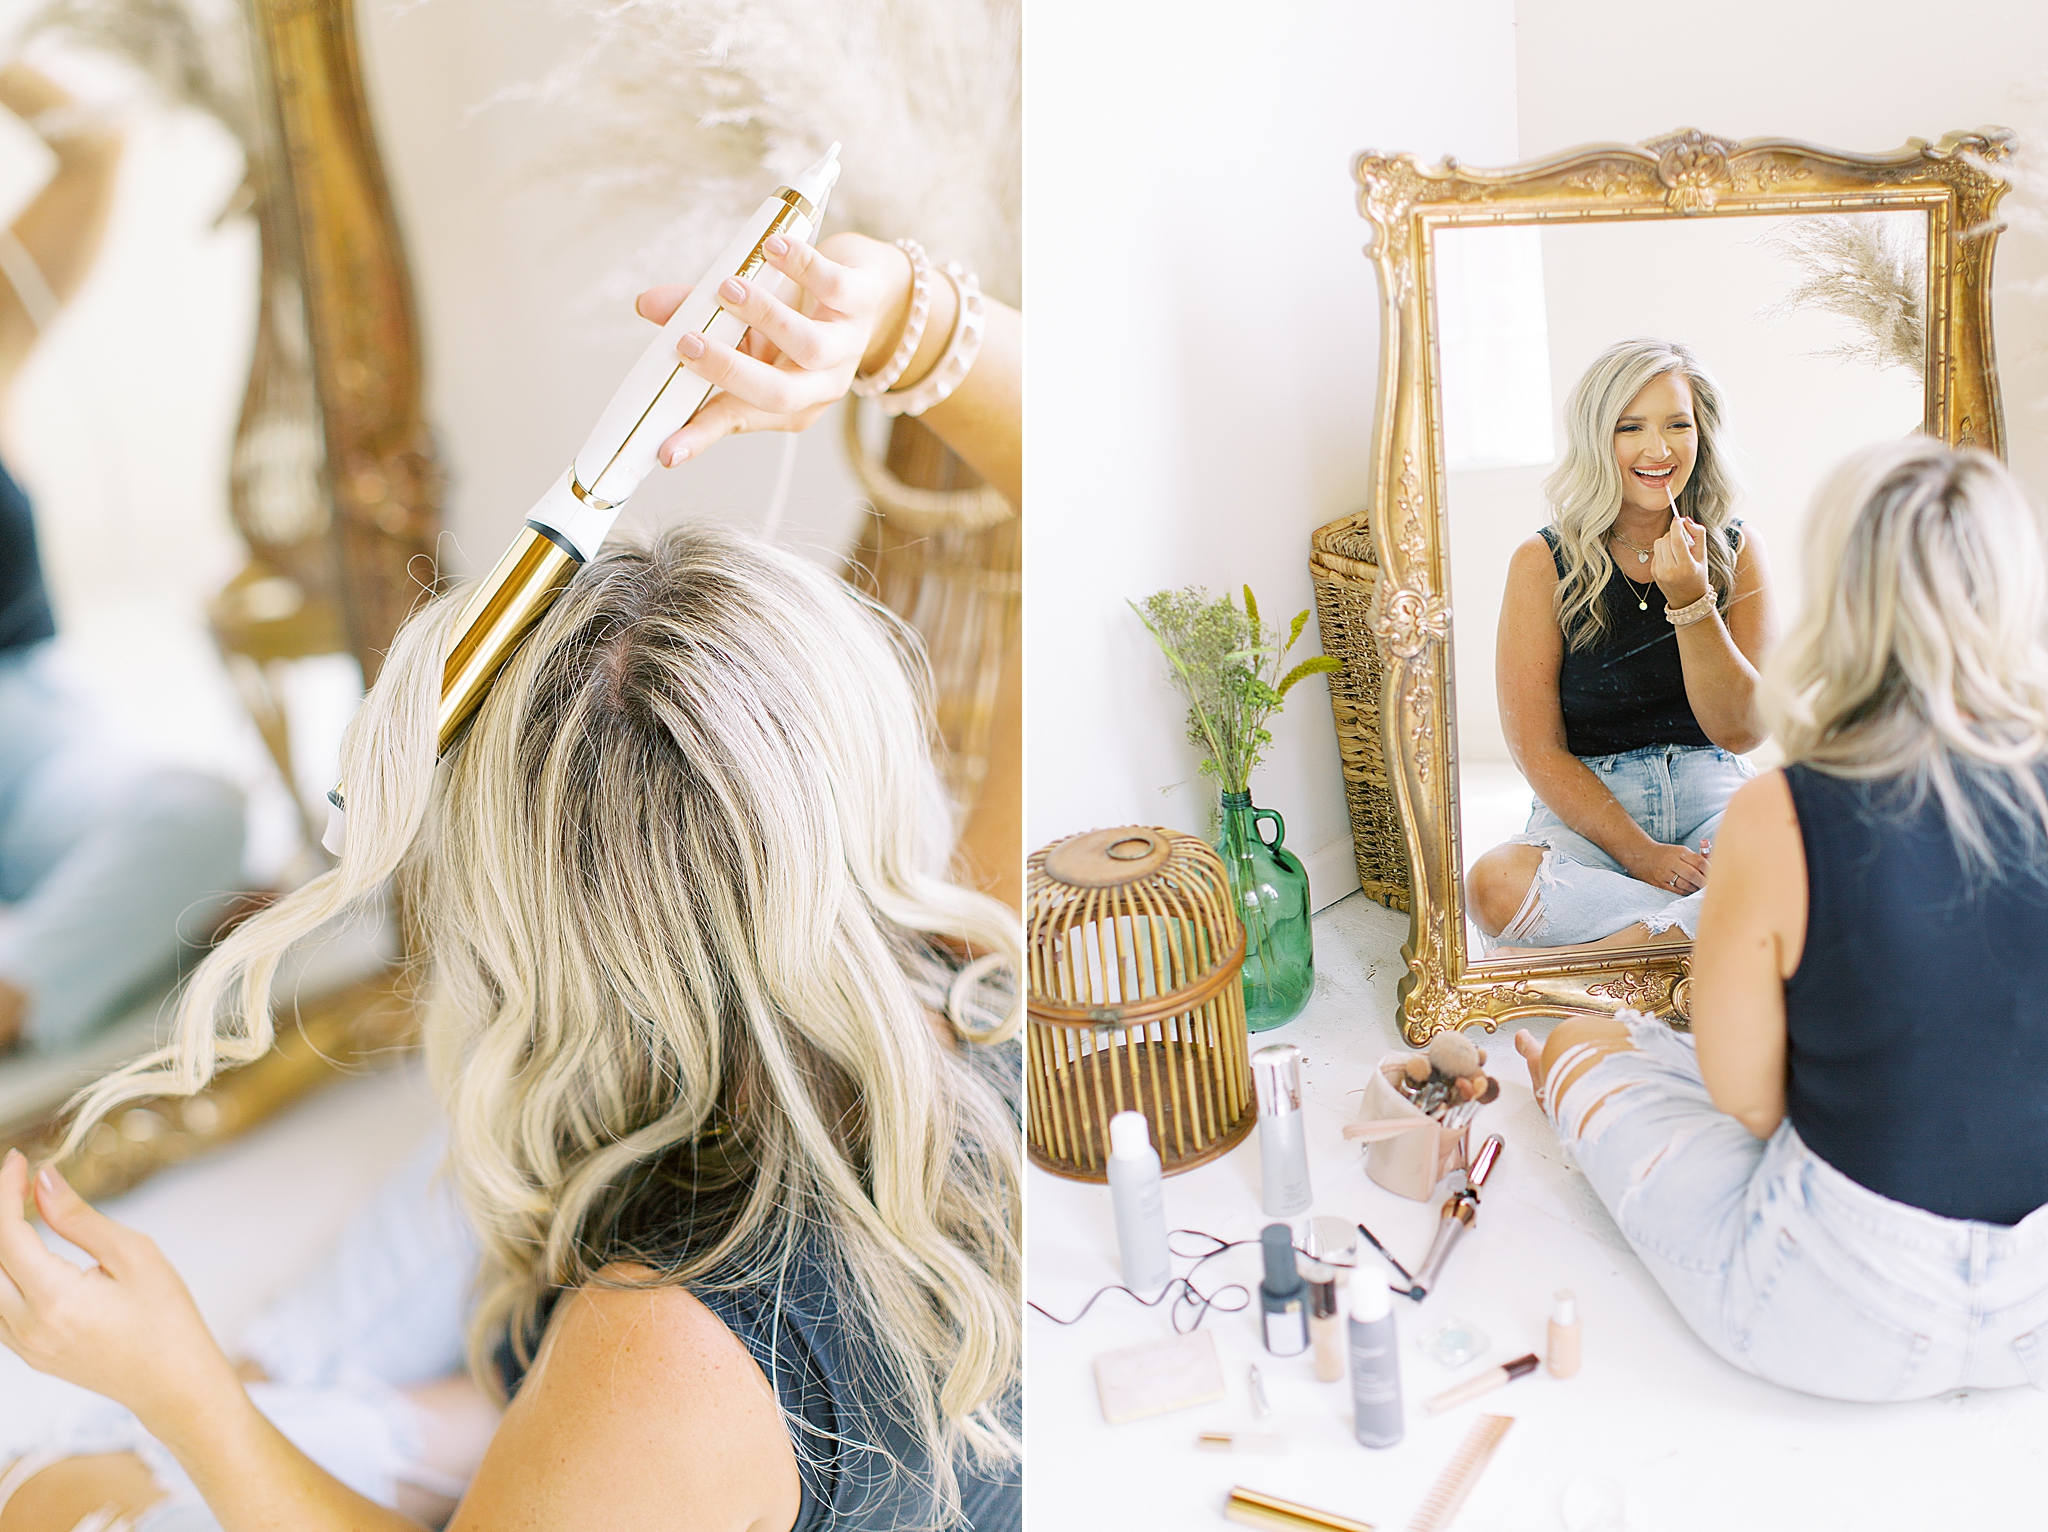 Charlotte branding session for makeup and hair artist